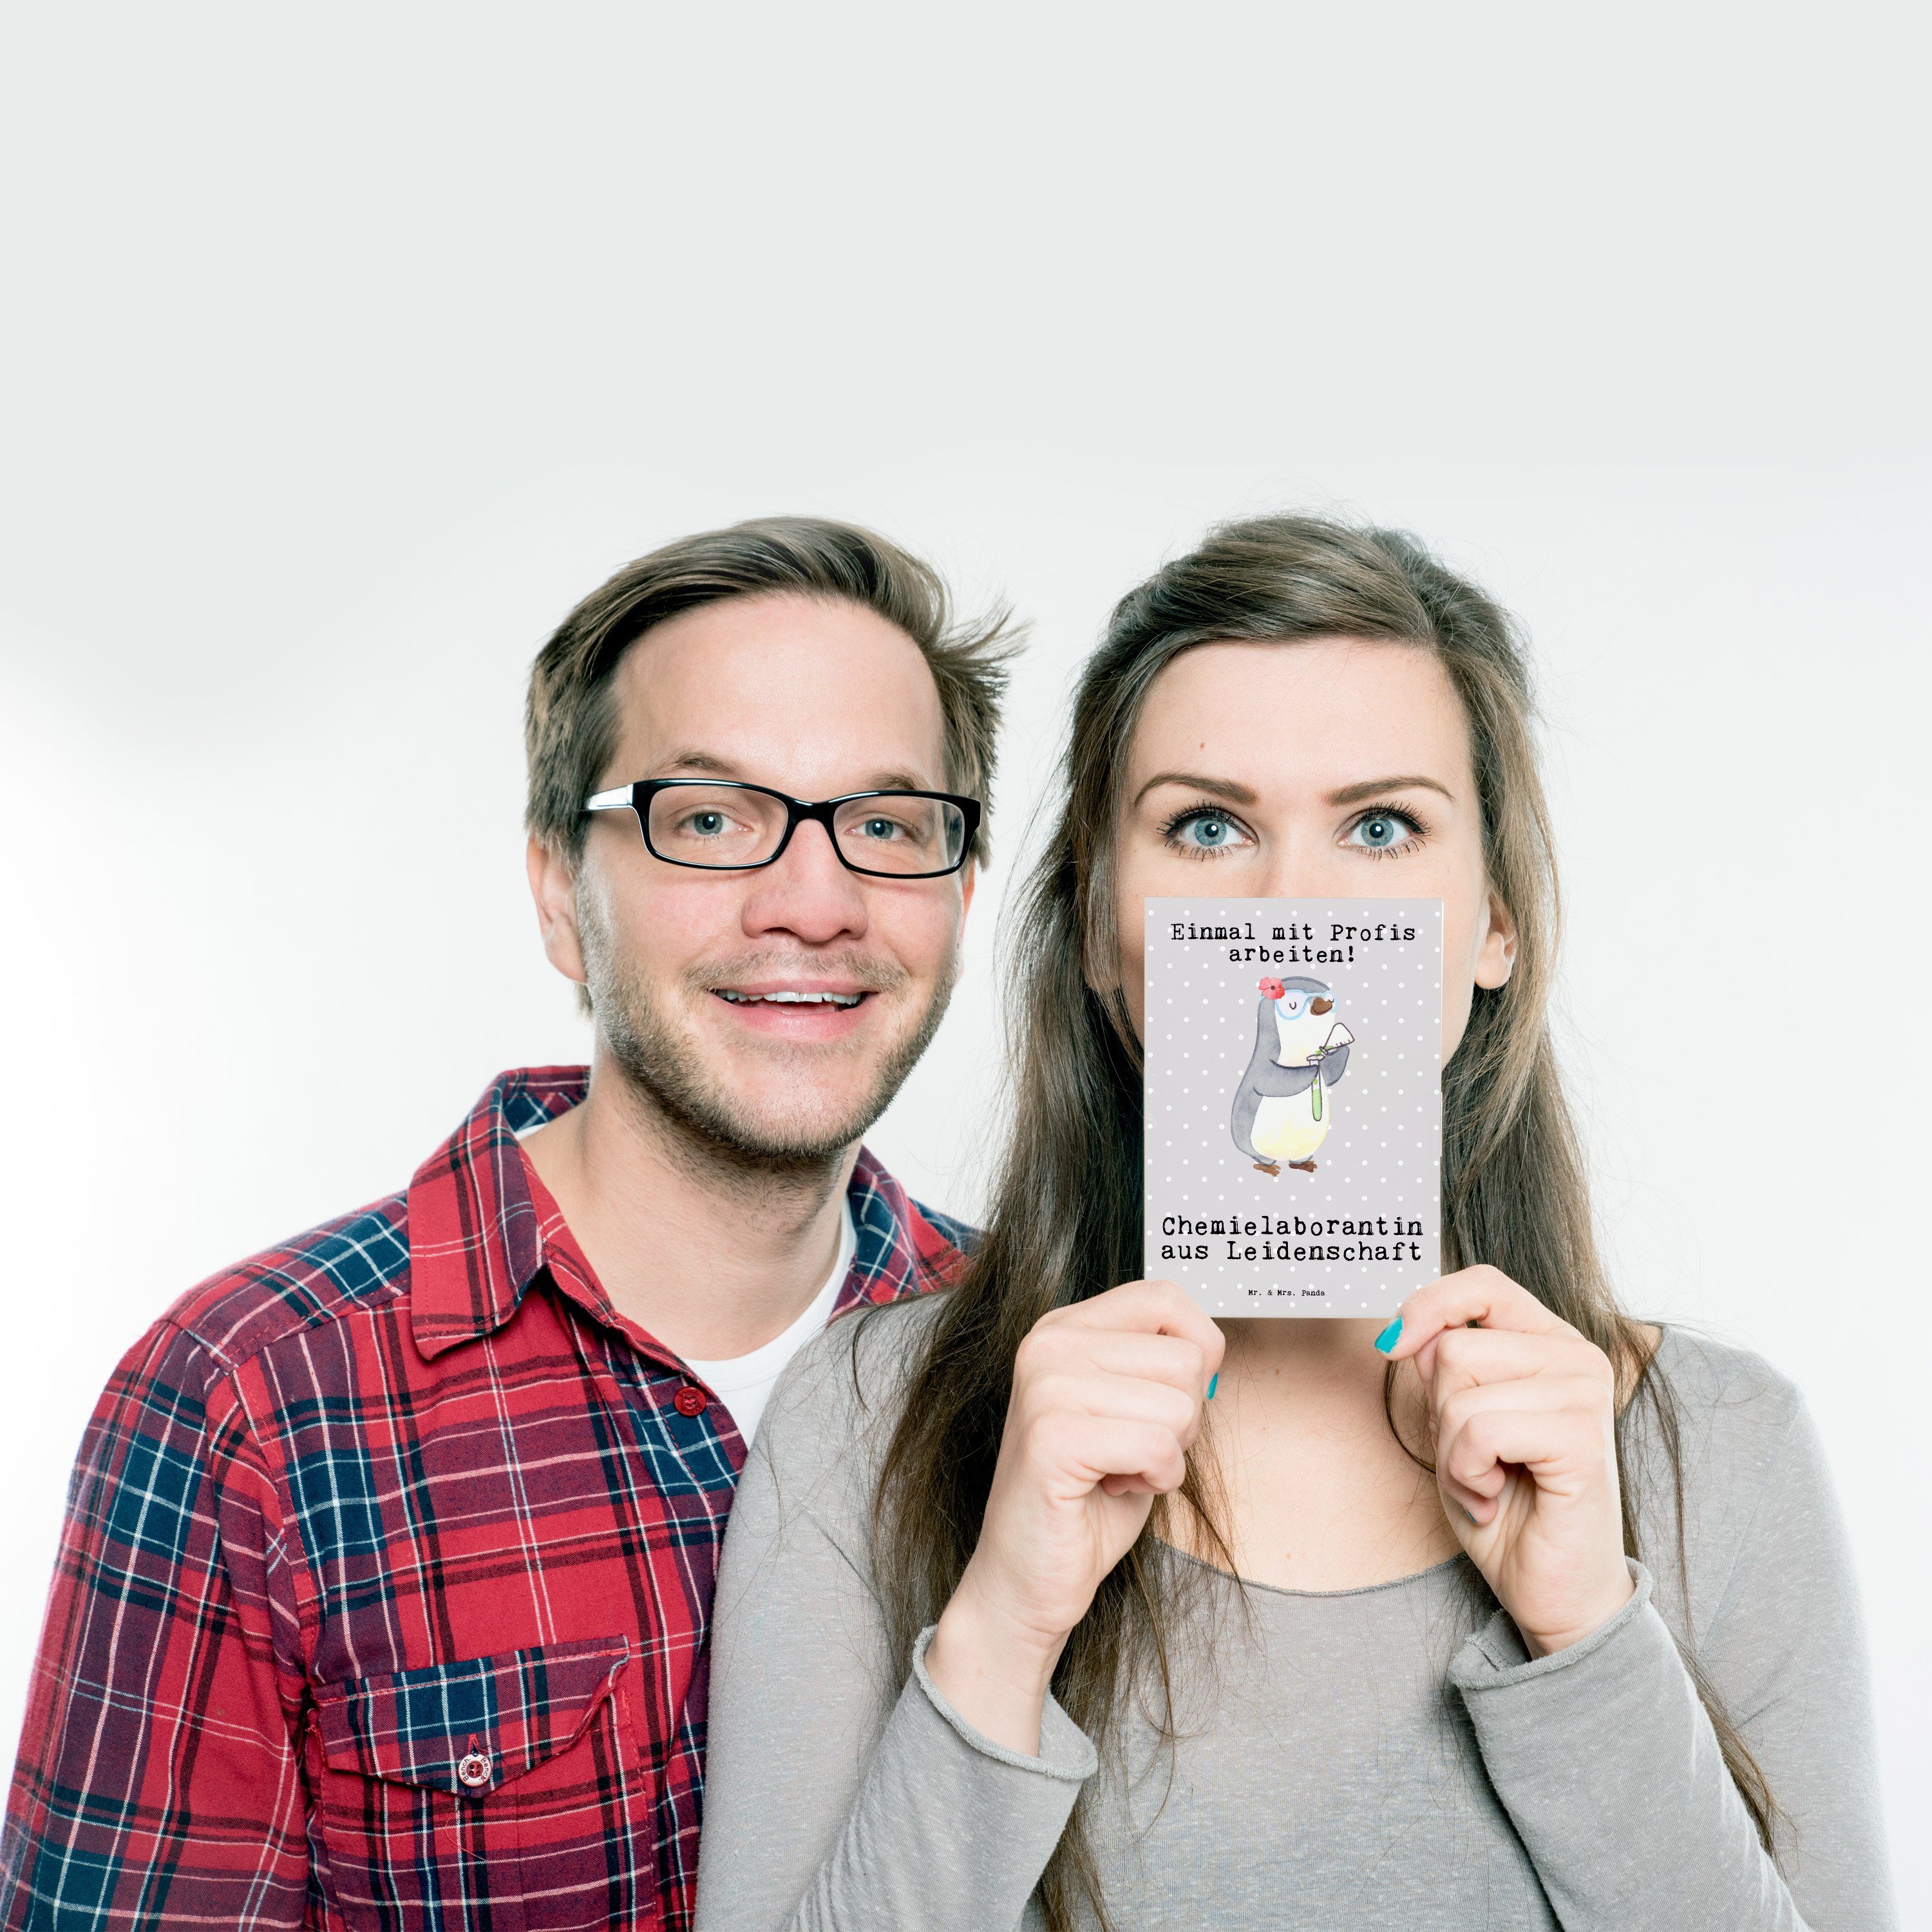 Mr. & Mrs. - aus Chemielaborantin Leidenschaft Geschenk, Postkarte Pastell Grau - Geschenk Panda